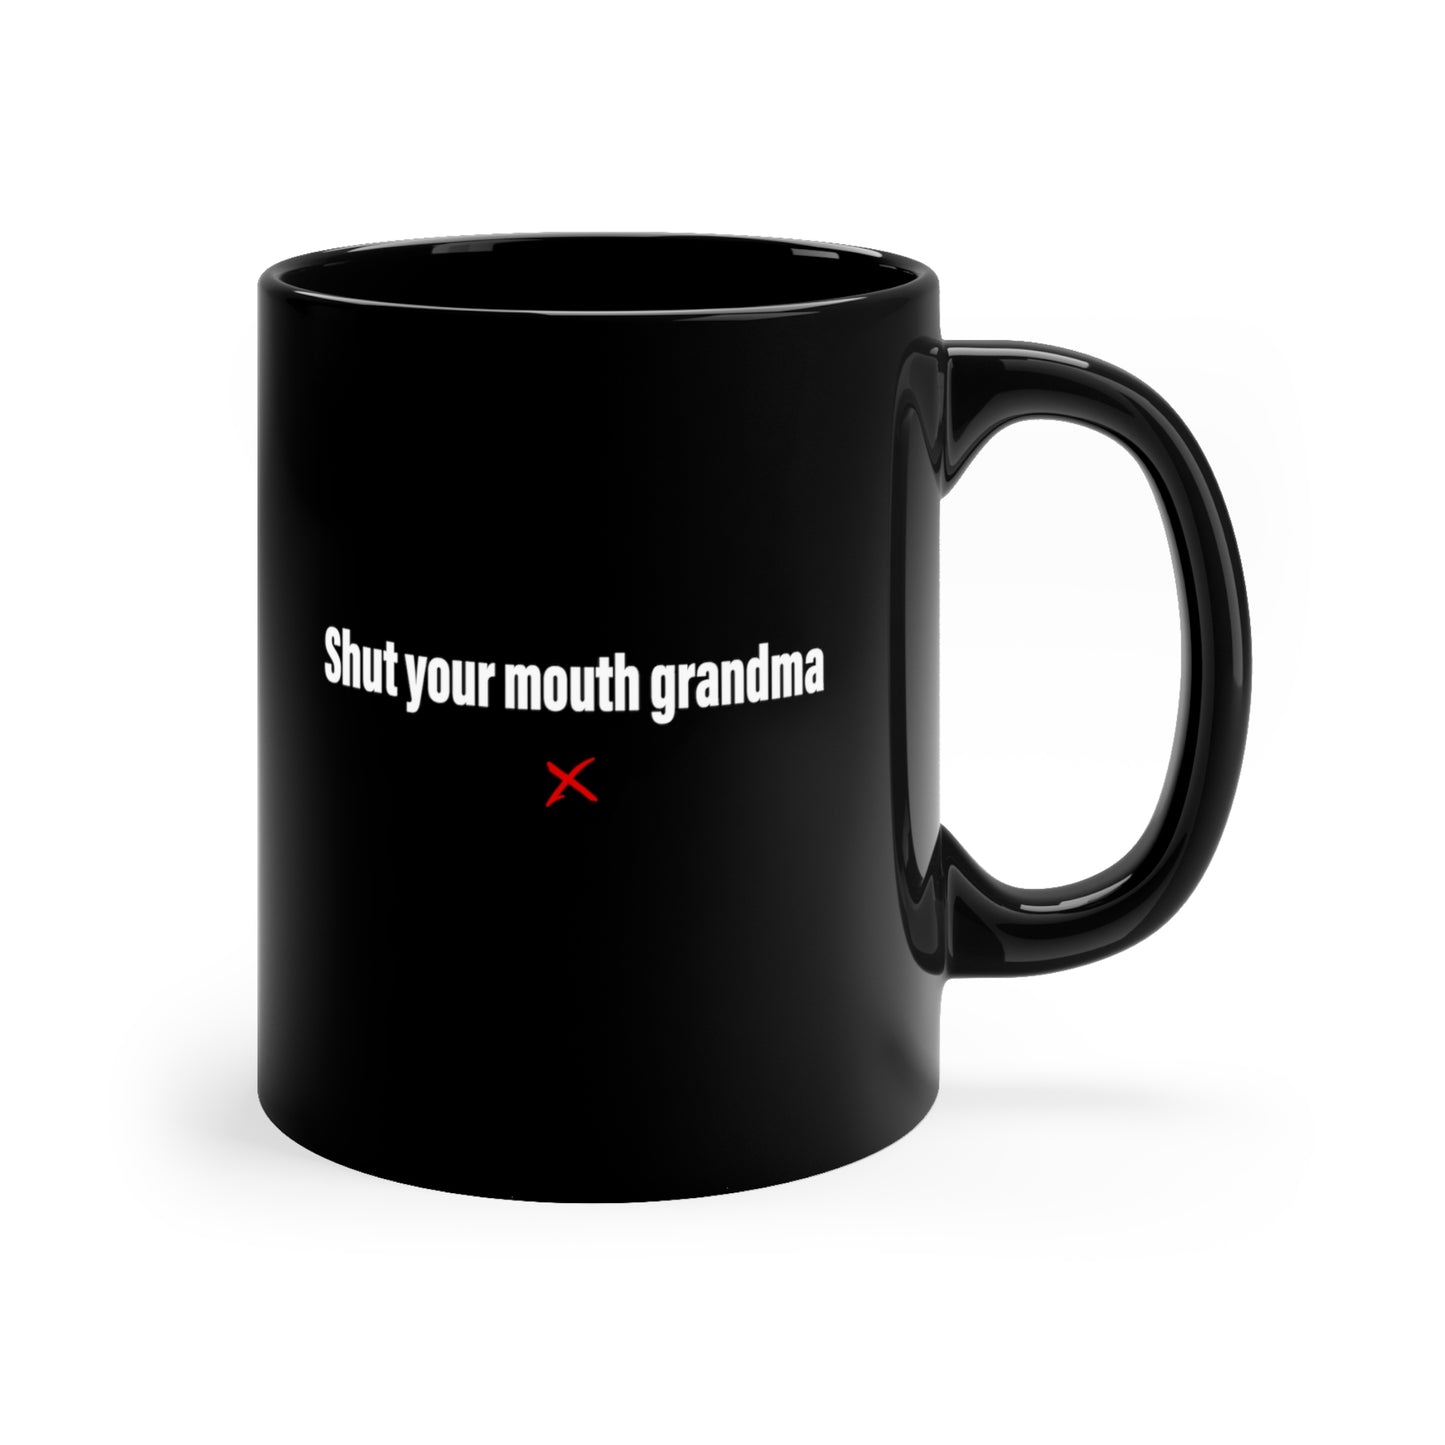 Shut your mouth grandma - Mug